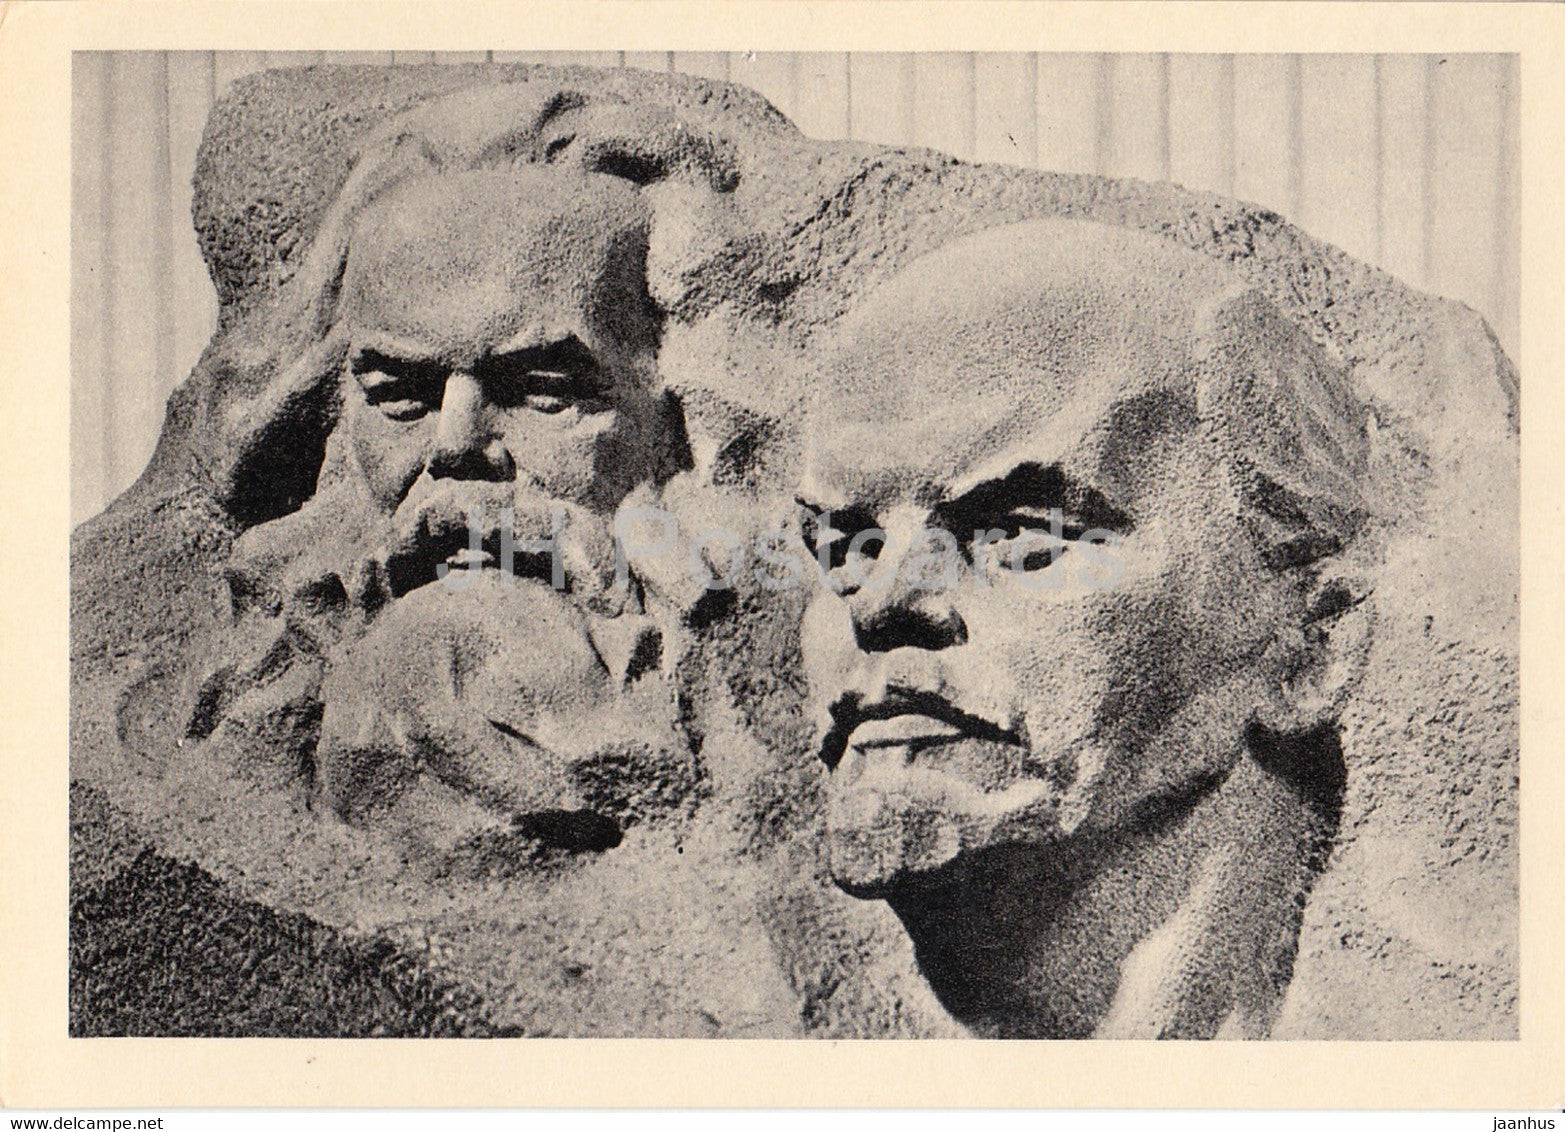 beacons of communism Karl Marx and Lenin - 1967 - Russia USSR - unused - JH Postcards